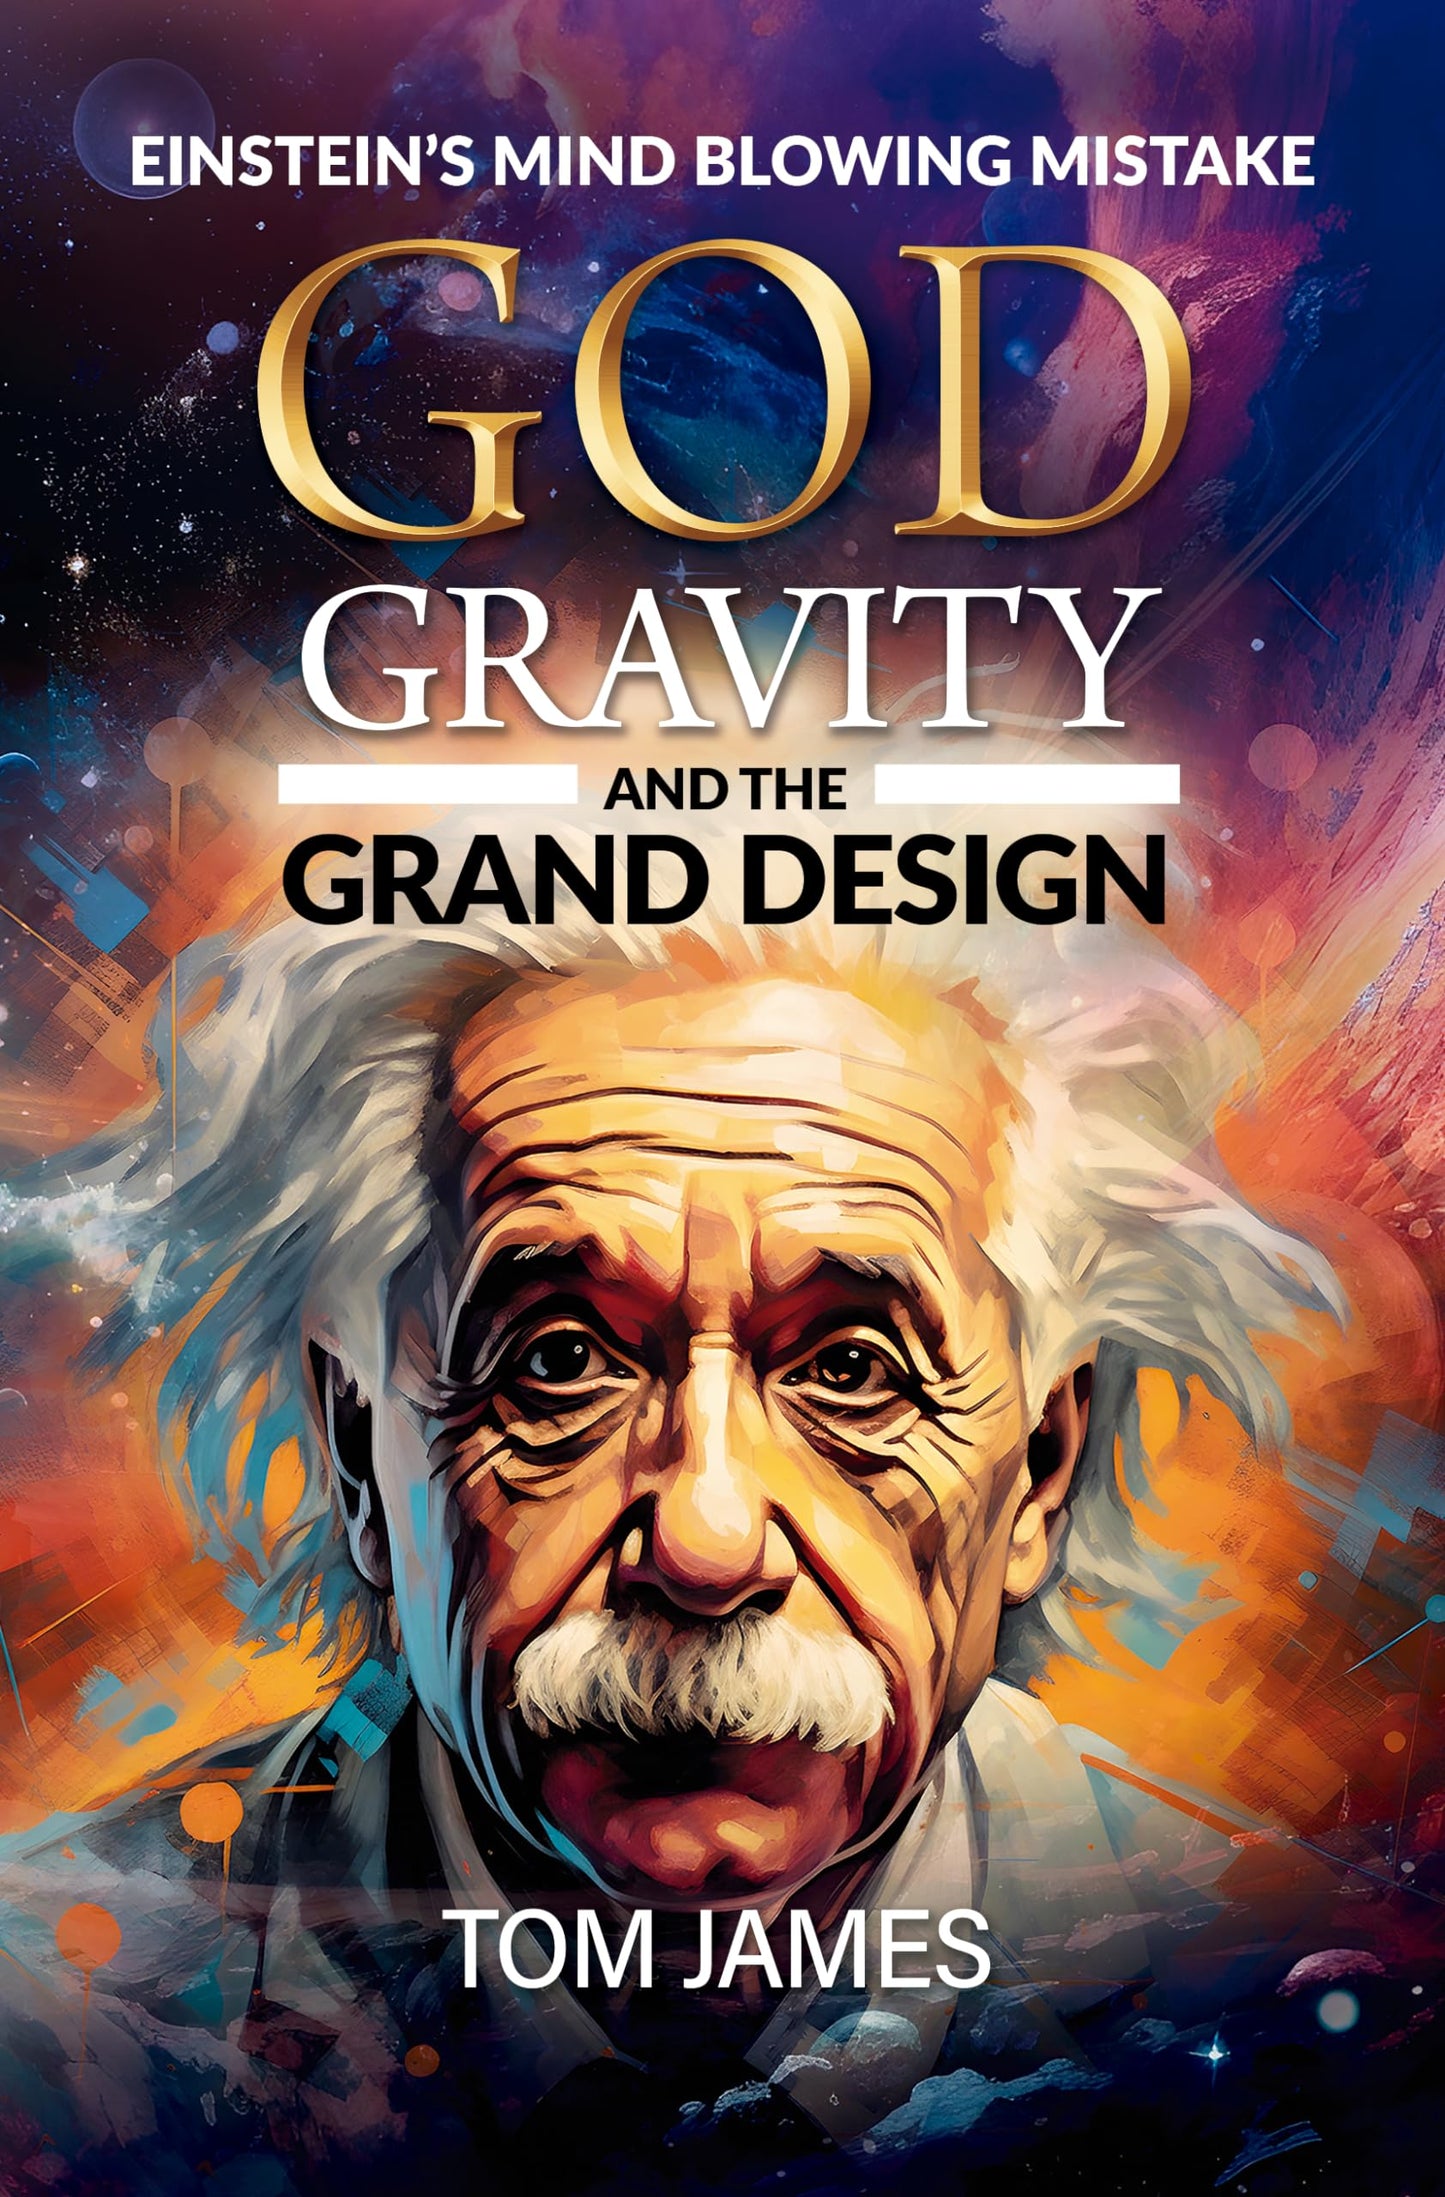 God, Gravity and the Grand Design: Einstein’s Mindblowing Mistake